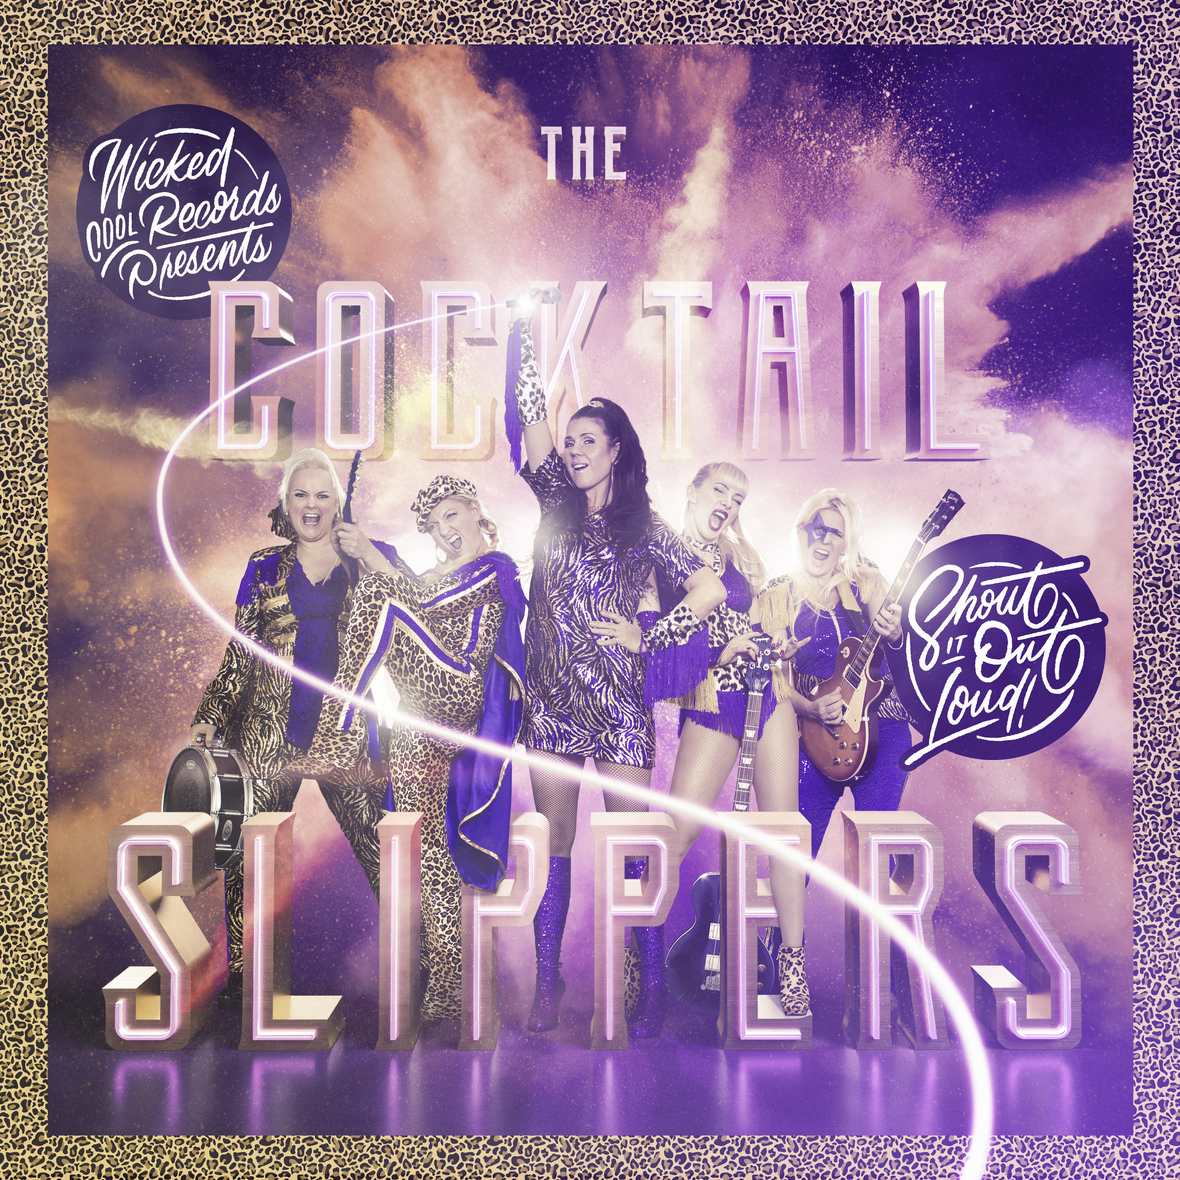 imagen 4 de La banda noruega The Cocktail Slippers publica el quinto álbum de su carrera.